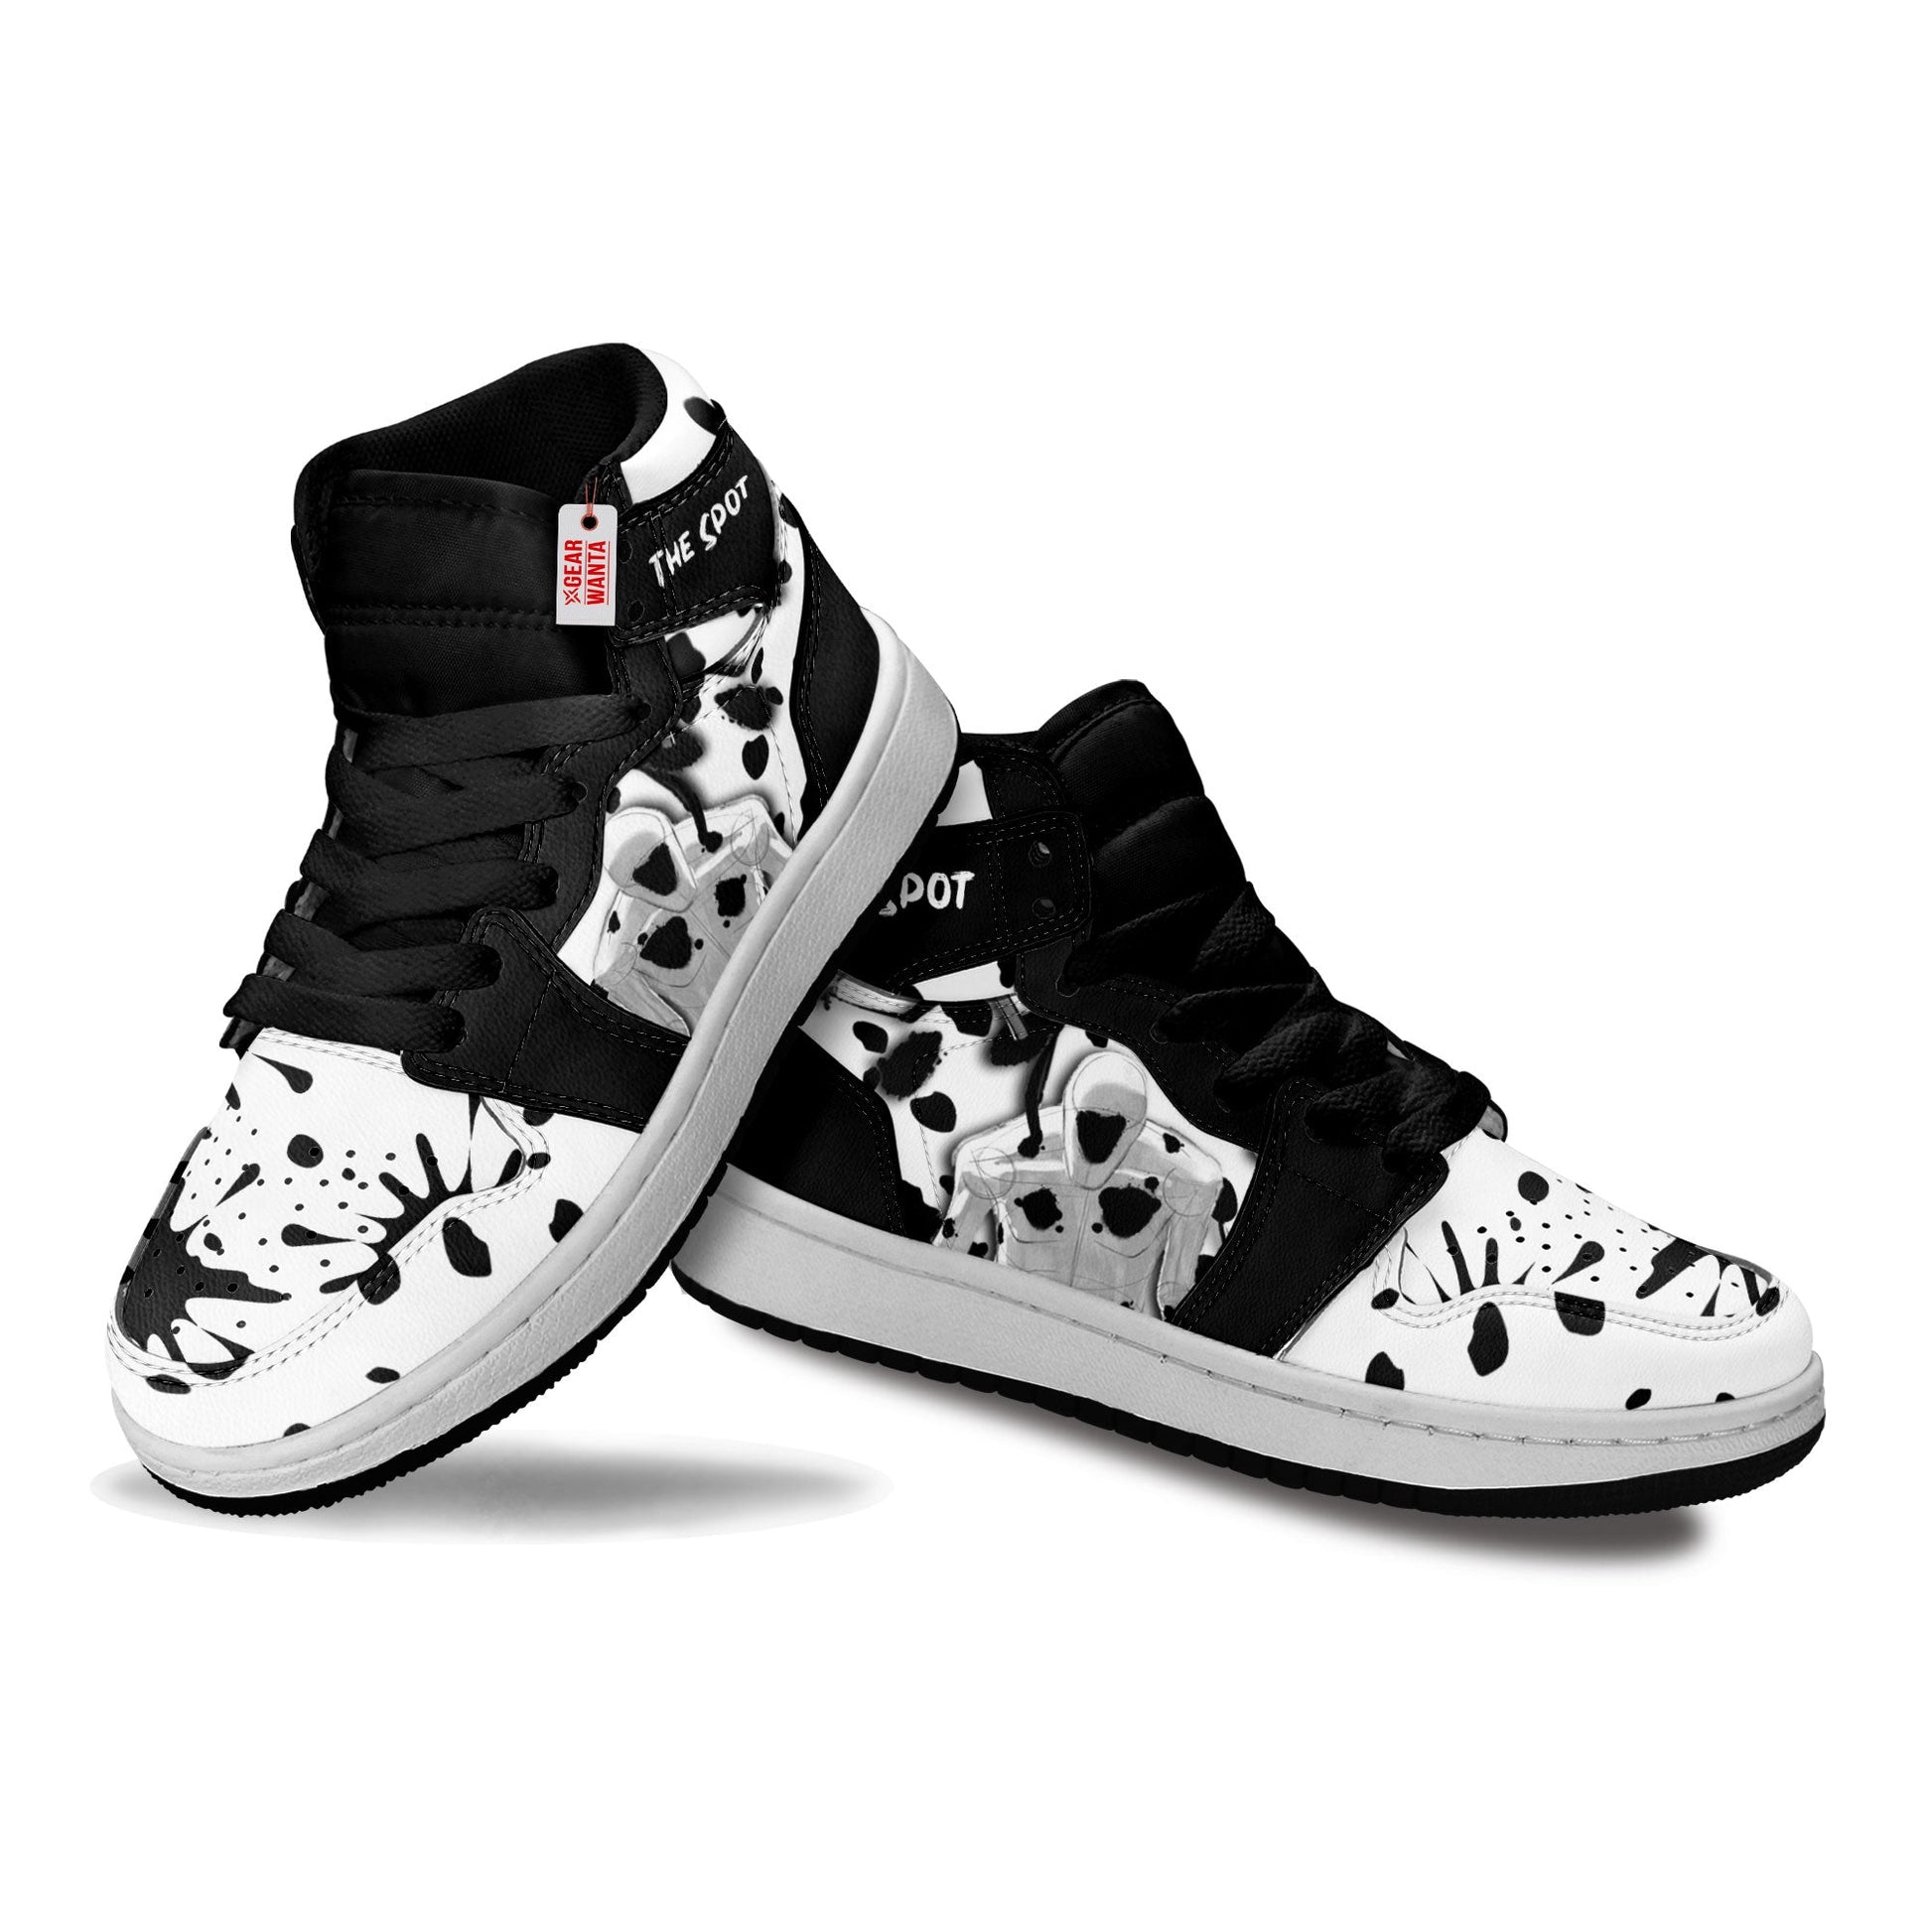 The Spot Spider-Verse Kid Sneakers Custom For Kids-Gear Wanta